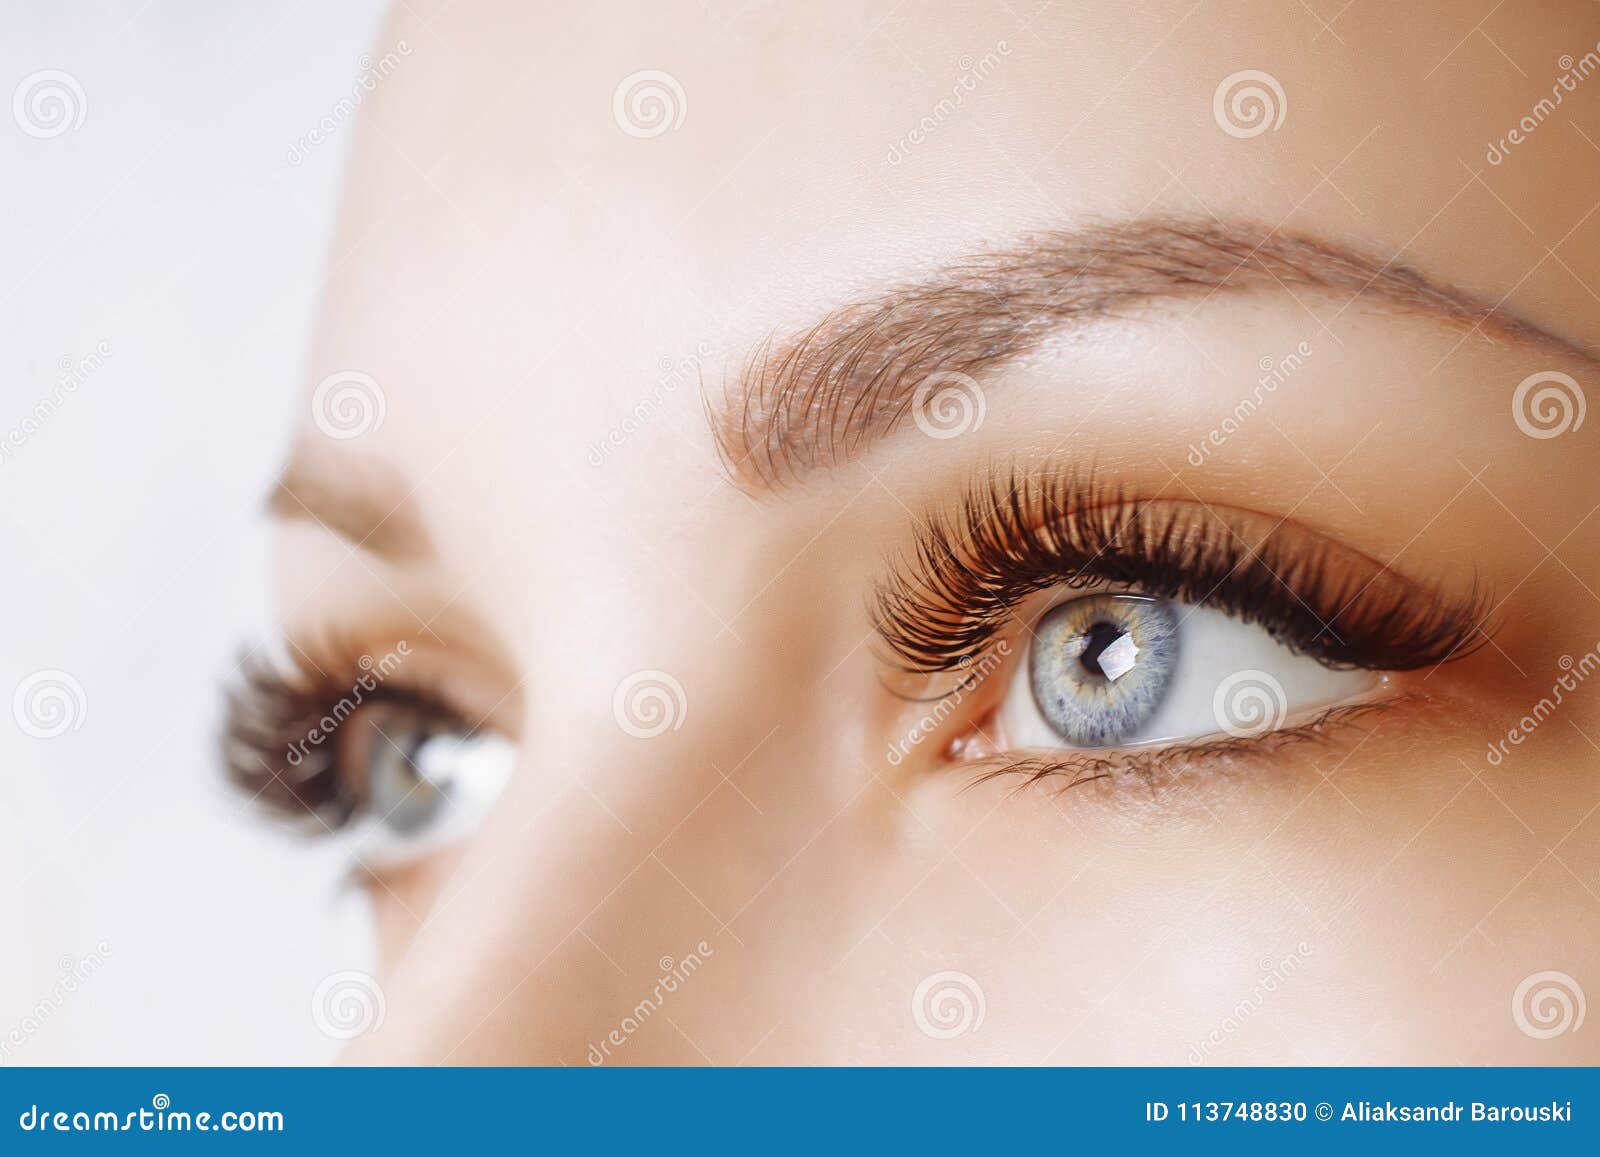 eyelash extension procedure. woman eye with long eyelashes. close up, selective focus.